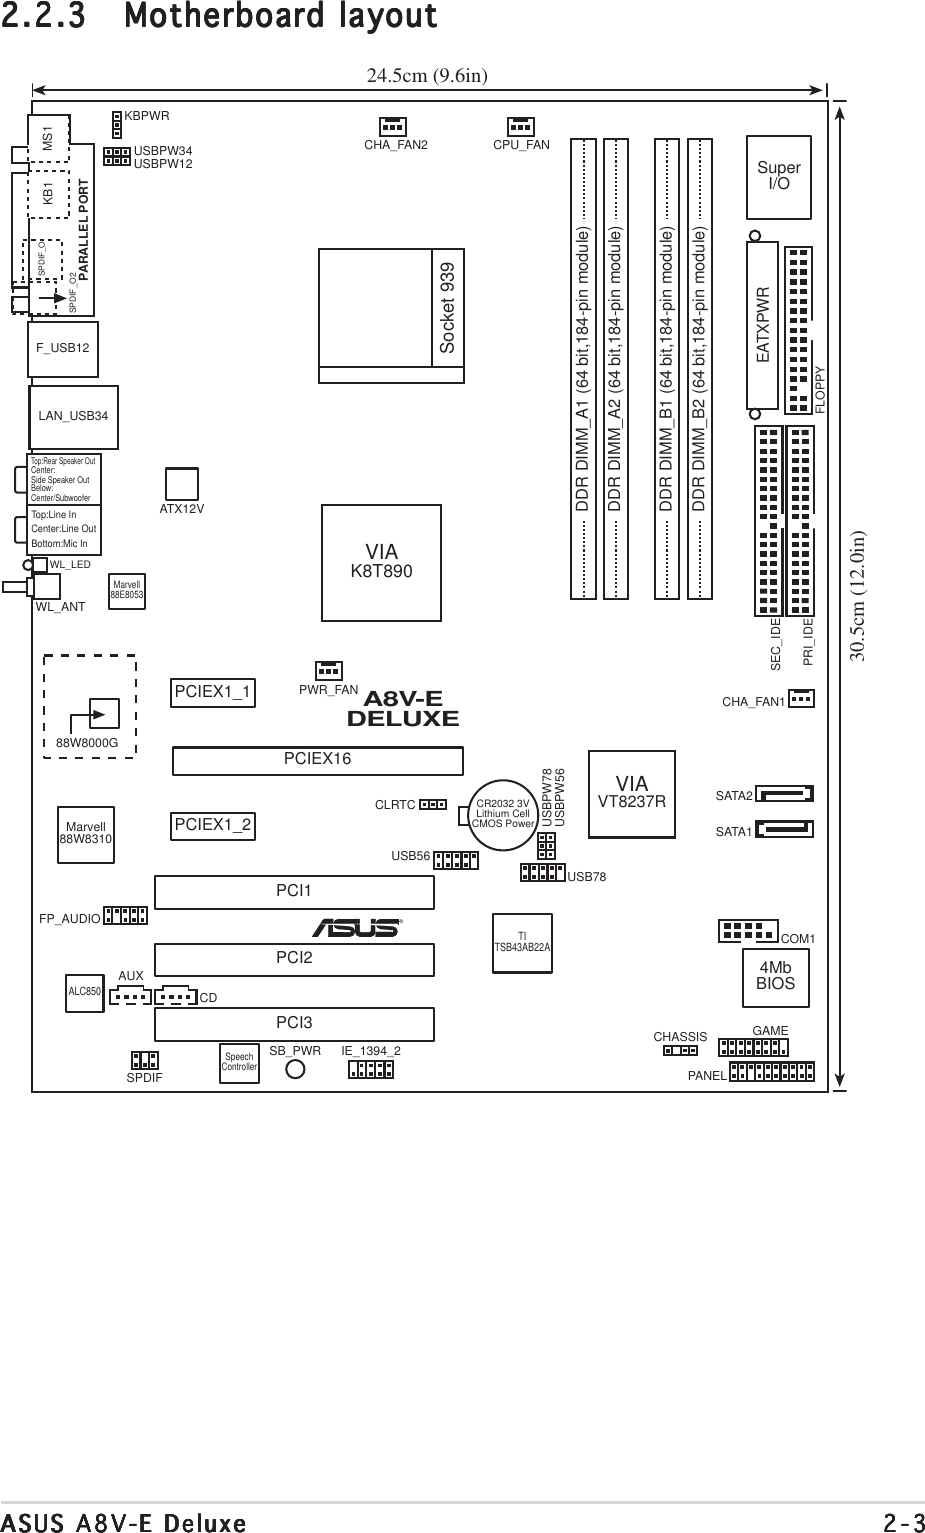 ASUS A8V-E DeluxeASUS A8V-E DeluxeASUS A8V-E DeluxeASUS A8V-E DeluxeASUS A8V-E Deluxe 2-32-32-32-32-32.2.32.2.32.2.32.2.32.2.3 Motherboard layoutMotherboard layoutMotherboard layoutMotherboard layoutMotherboard layoutBottom:Mic InCenter:Line OutTop:Line InPARALLEL PORTMS1KB1SPDIF_OSPDIF_O2WL_LEDWL_ANTBelow:Center/SubwooferCenter:Side Speaker OutTop:Rear Speaker OutPANELA8V-EDELUXERCR2032 3VLithium CellCMOS PowerCDAUXPCI1FP_AUDIOGAMECHASSISCLRTCPRI_IDESEC_IDEEATXPWRVIAVT8237RCOM1USB56USBPW56USBPW7824.5cm (9.6in)30.5cm (12.0in)SATA1VIAK8T890USB78CPU_FANSocket 939DDR DIMM_B1 (64 bit,184-pin module)DDR DIMM_A1 (64 bit,184-pin module)DDR DIMM_A2 (64 bit,184-pin module)DDR DIMM_B2 (64 bit,184-pin module)CHA_FAN2LAN_USB34F_USB12PCI2PCI3PCIEX1_1PCIEX1_2PCIEX16SPDIFSB_PWR IE_1394_2SATA2PWR_FAN CHA_FAN1KBPWRUSBPW12USBPW34ATX12VFLOPPYSuperI/OALC850TITSB43AB22A4MbBIOSSpeechControllerMarvell88W831088W8000GMarvell88E8053